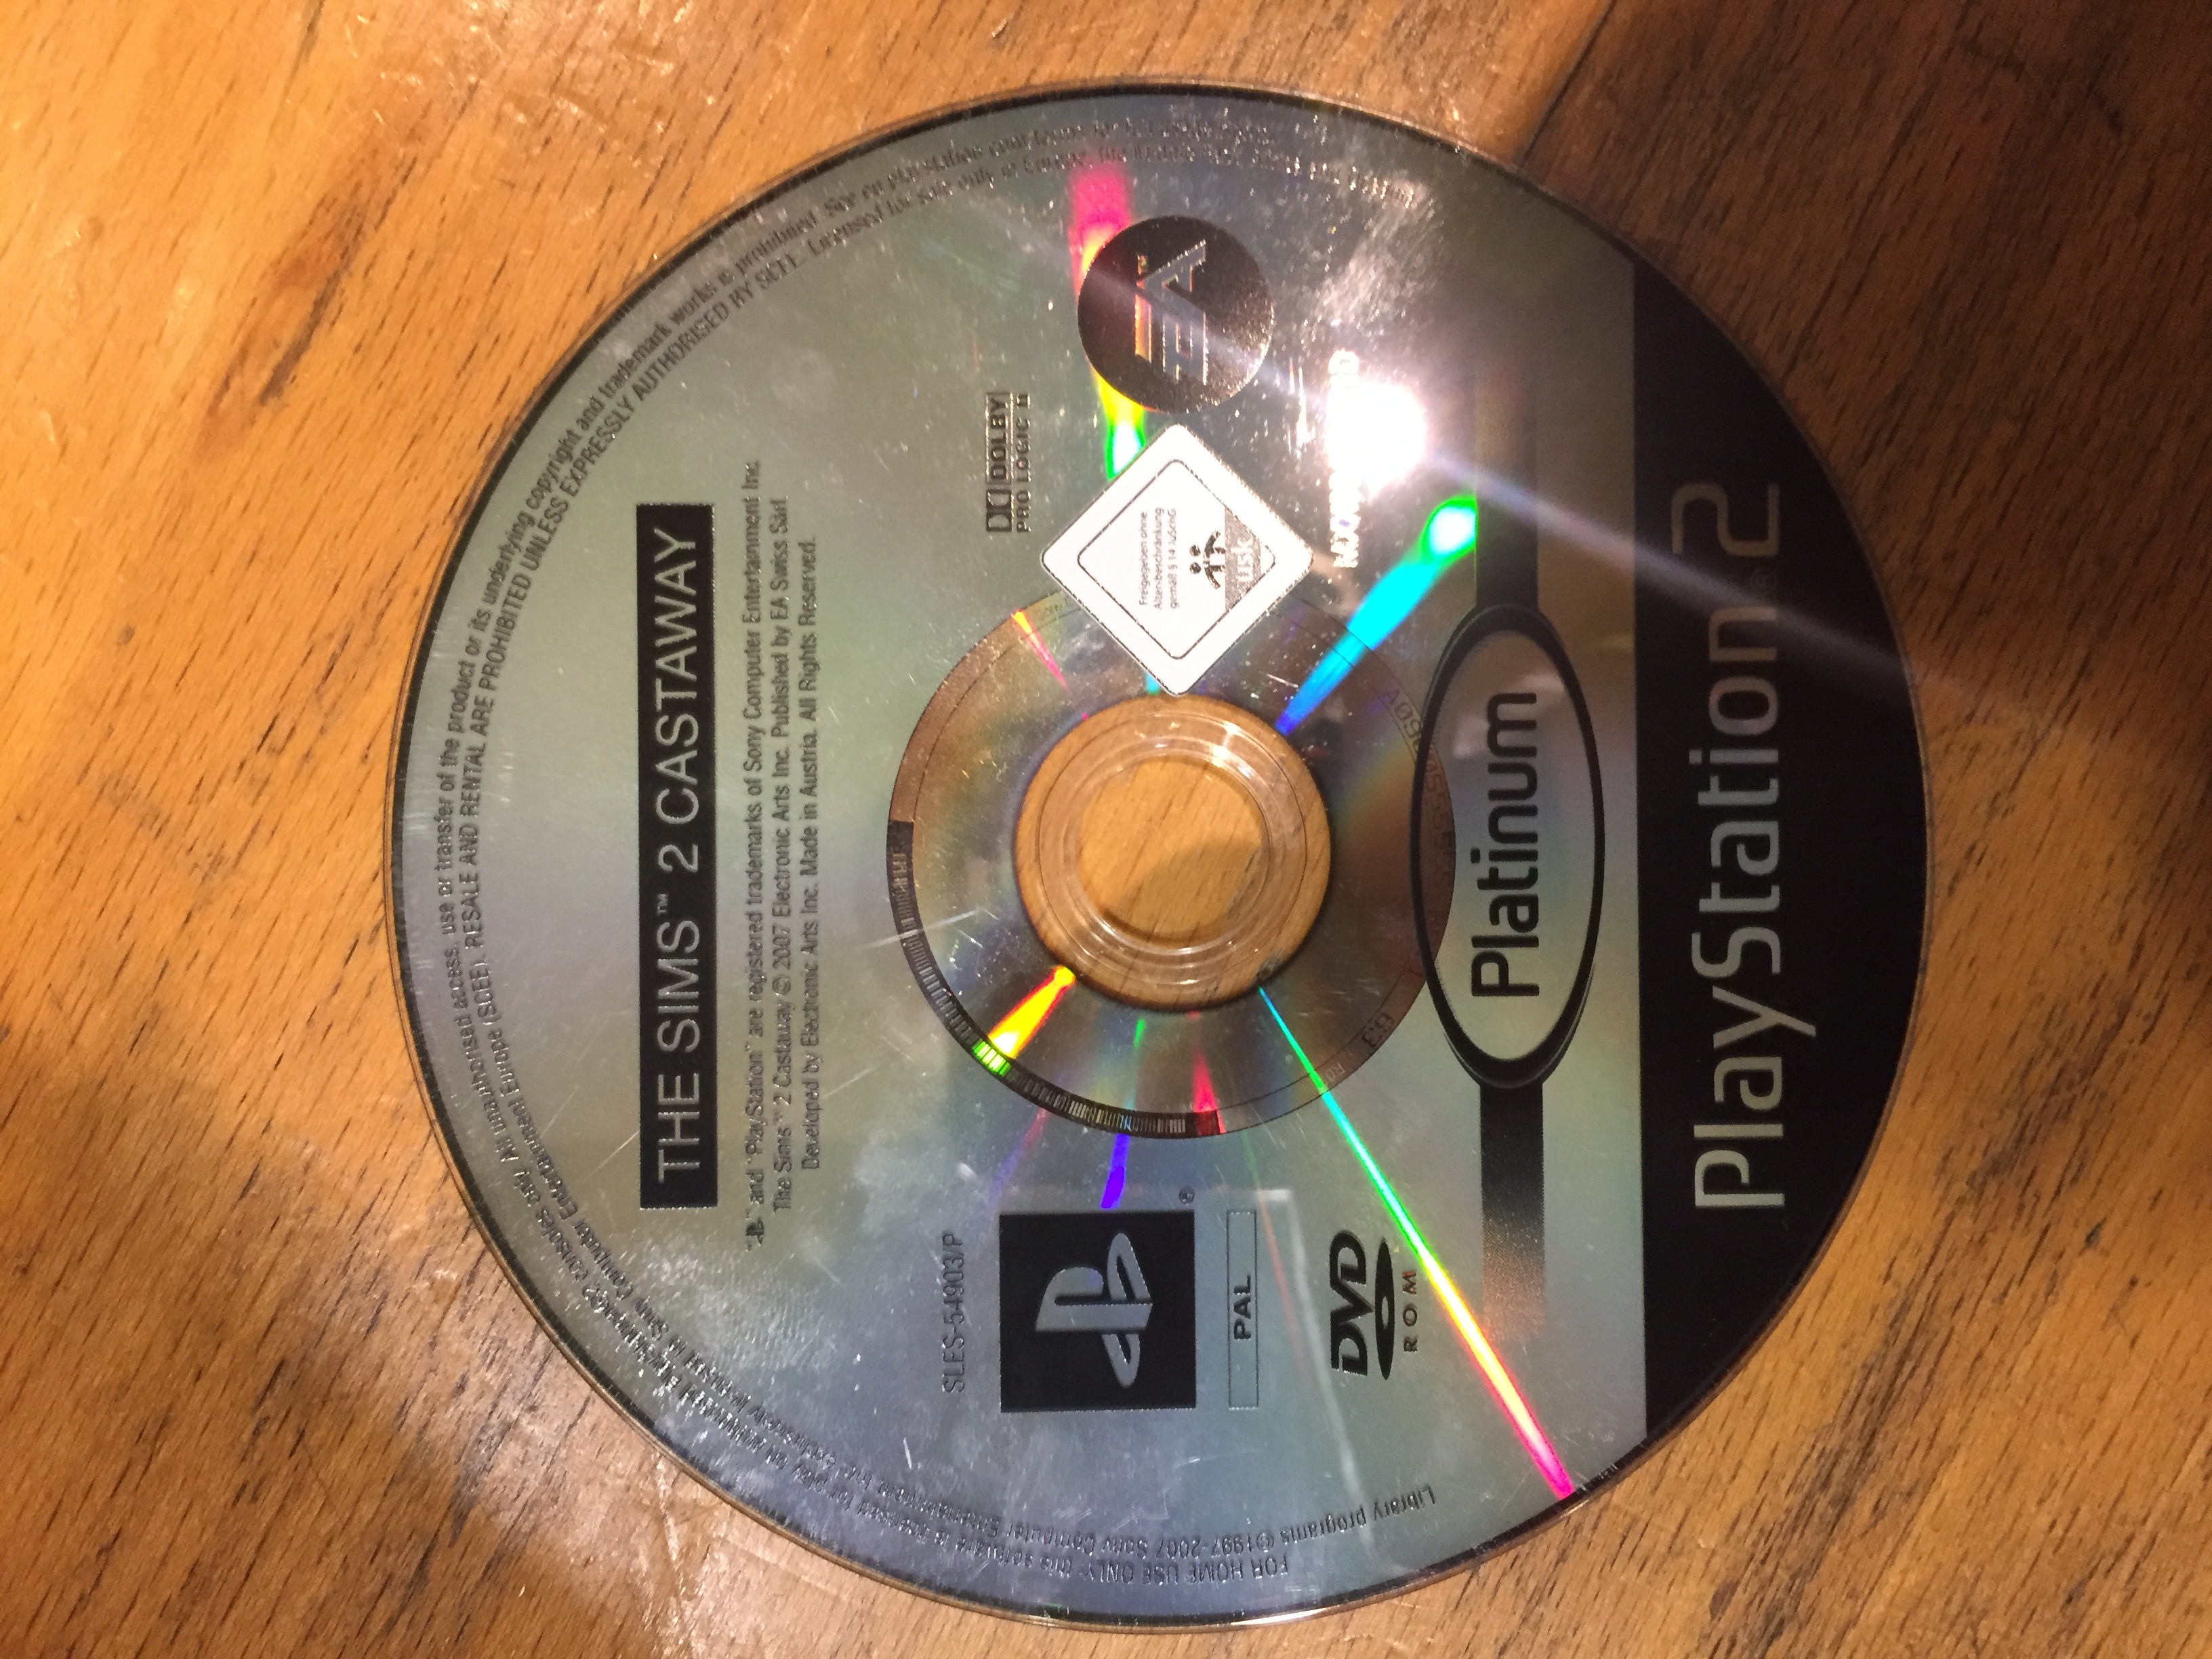 The Sims 2 Castaway Platinum CD - PAL